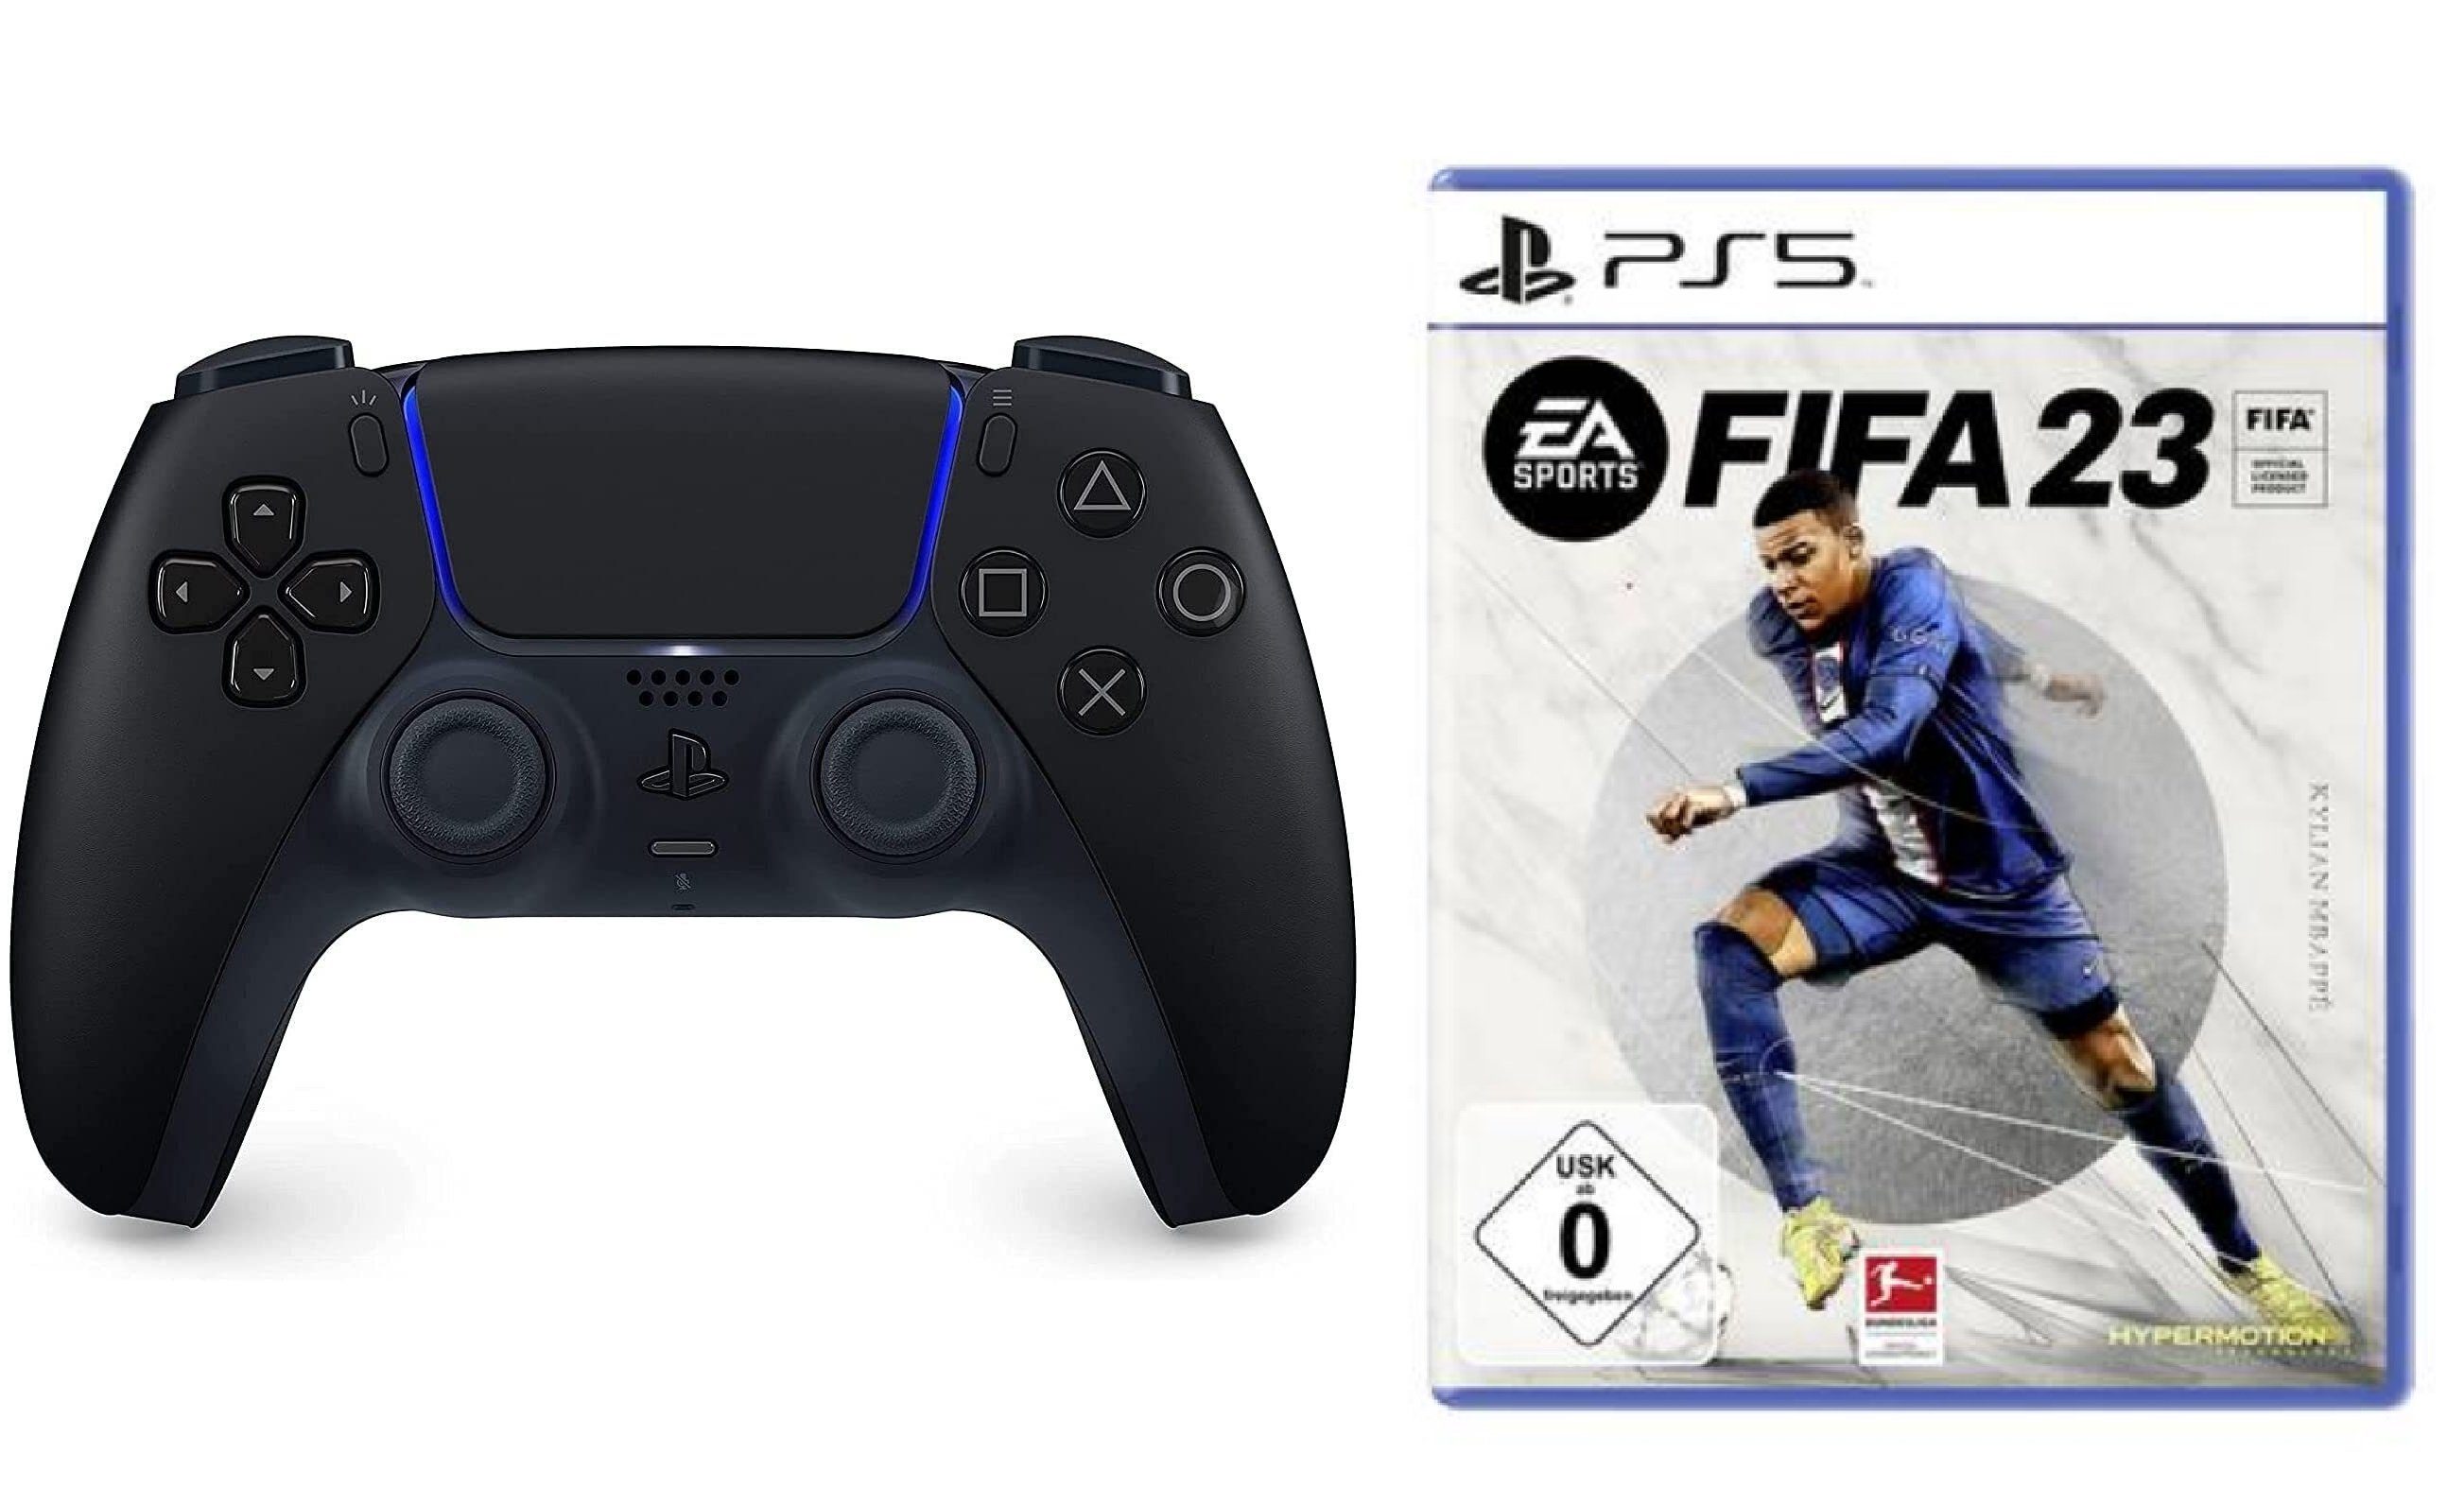 Playstation Playstation 5 Controller + FIFA 23 PS5 Spiel - PlayStation 5-Controller (DualSense Wireless-Controller)